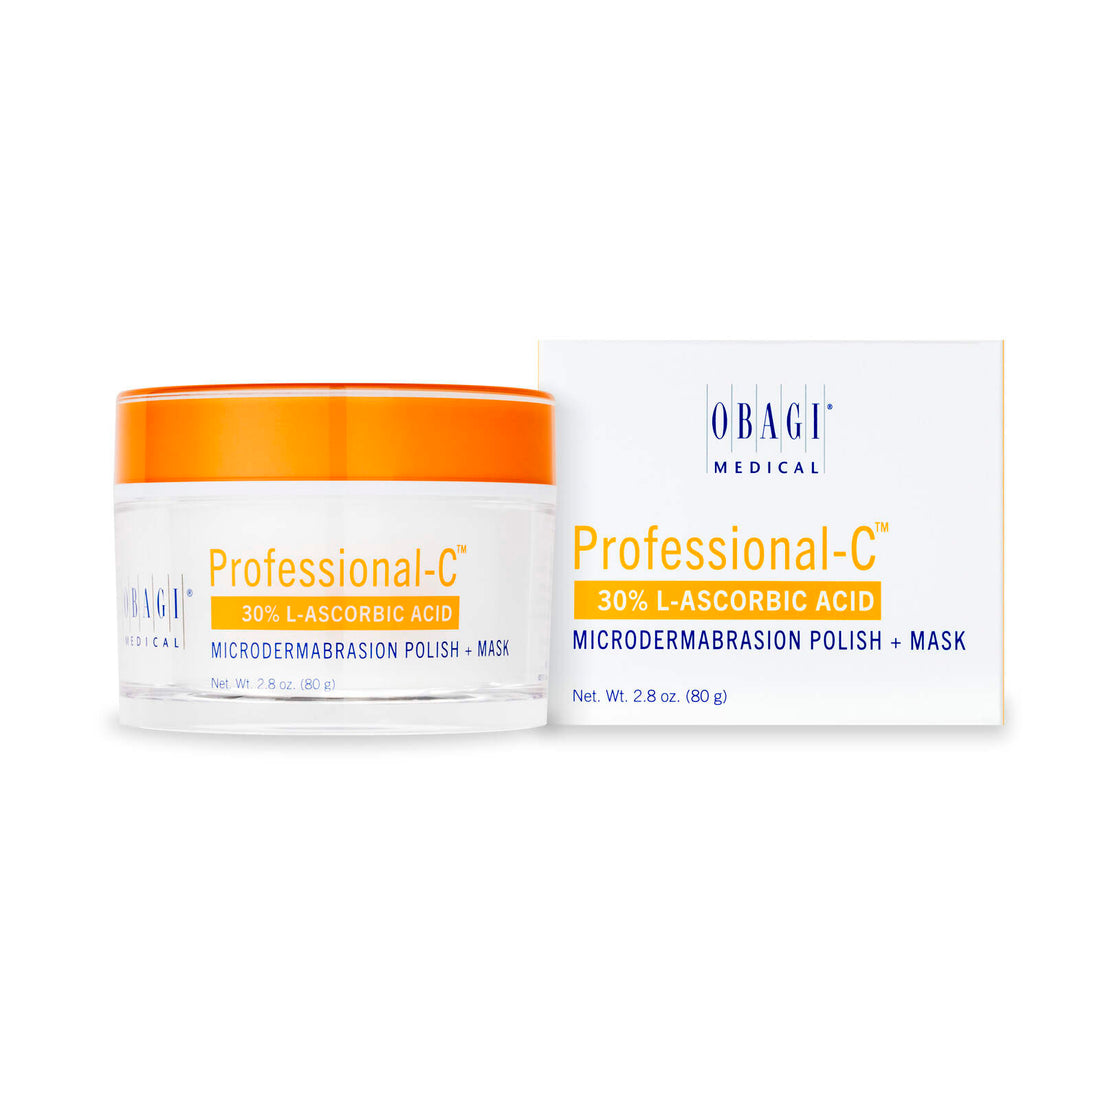 Obagi Professional C – Microdermabrasion Polish + Mask